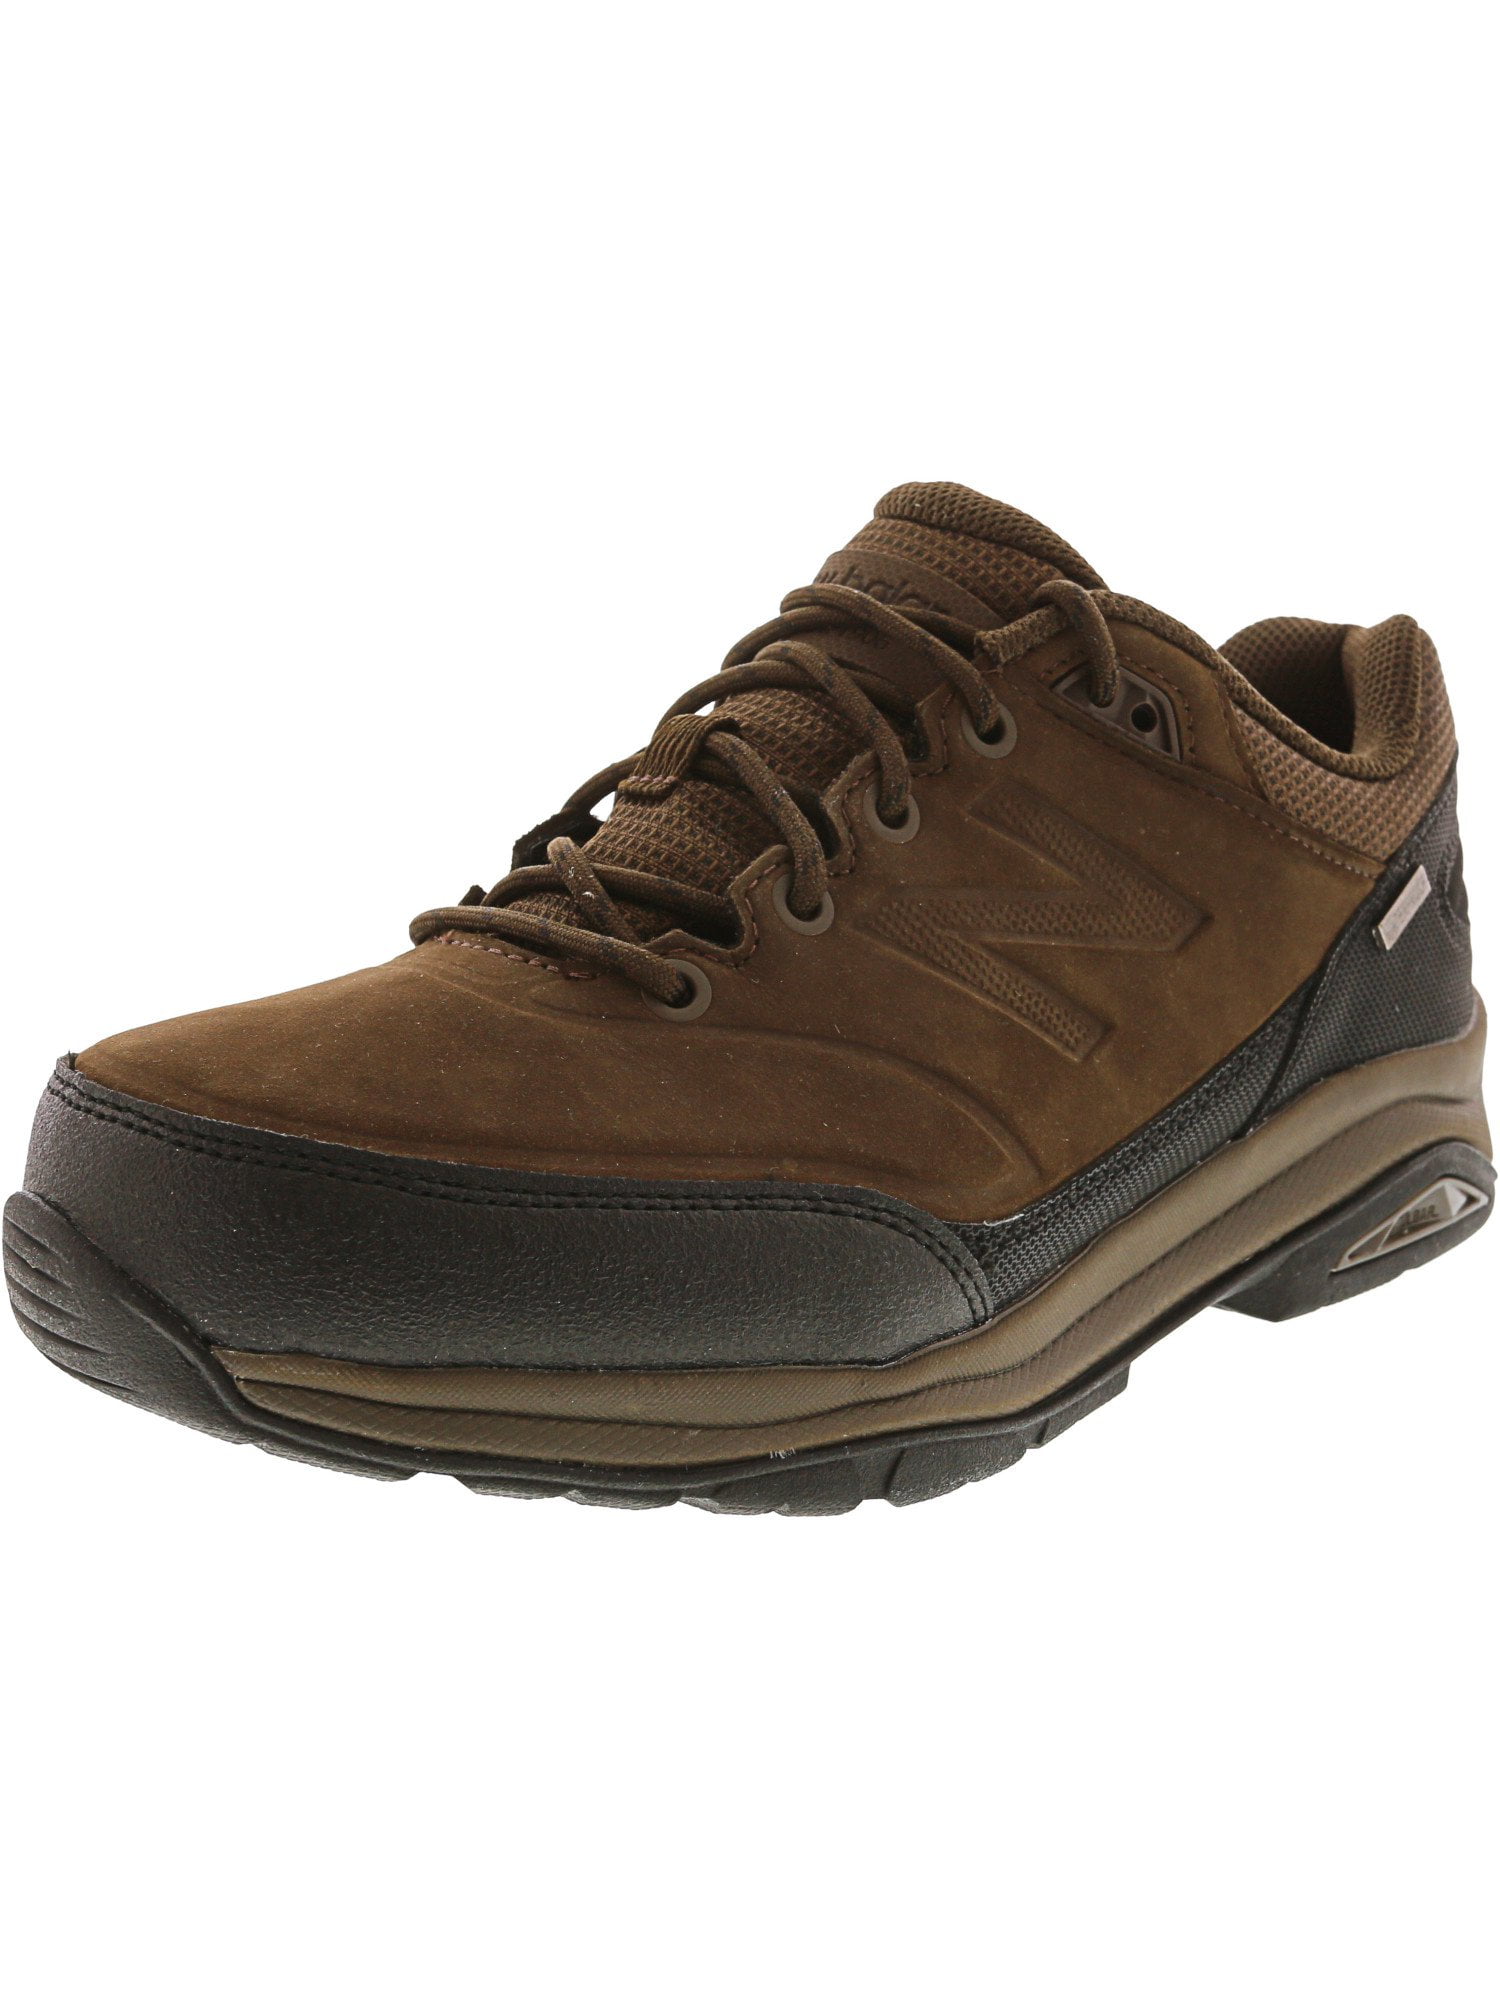 New Balance - New Balance Men?s MW1300 Hiking Shoes - 7WW - Dd ...